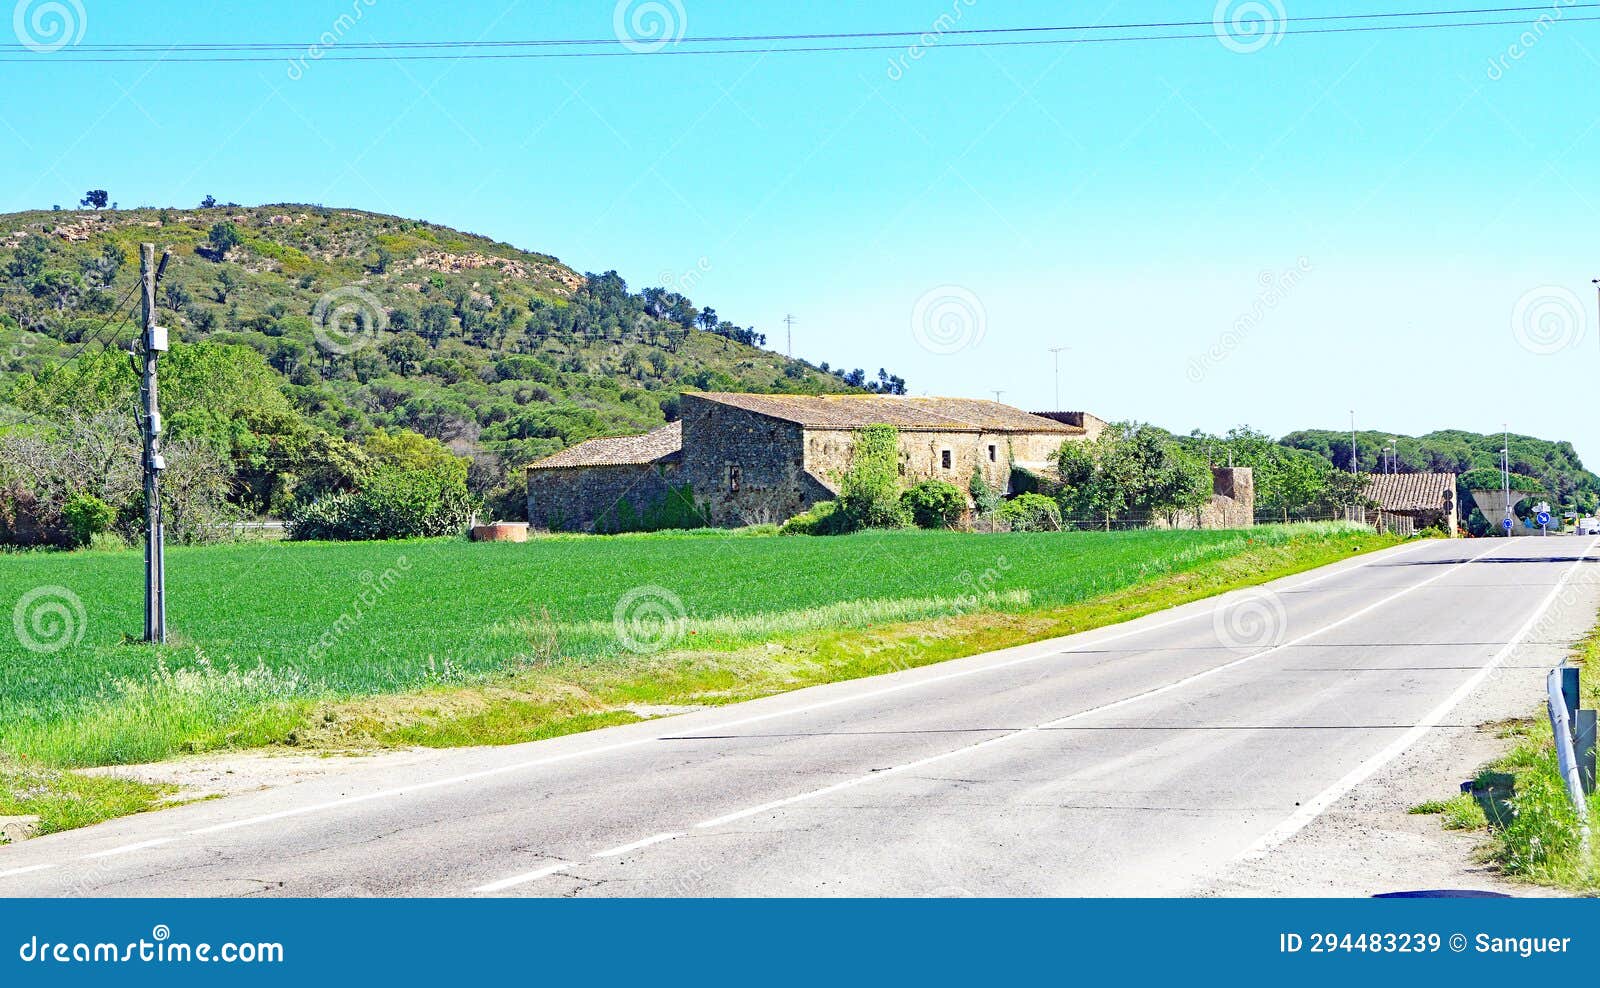 panoramic of peratallada, municipality of forallac, bajo ampurdÃ¡n, girona